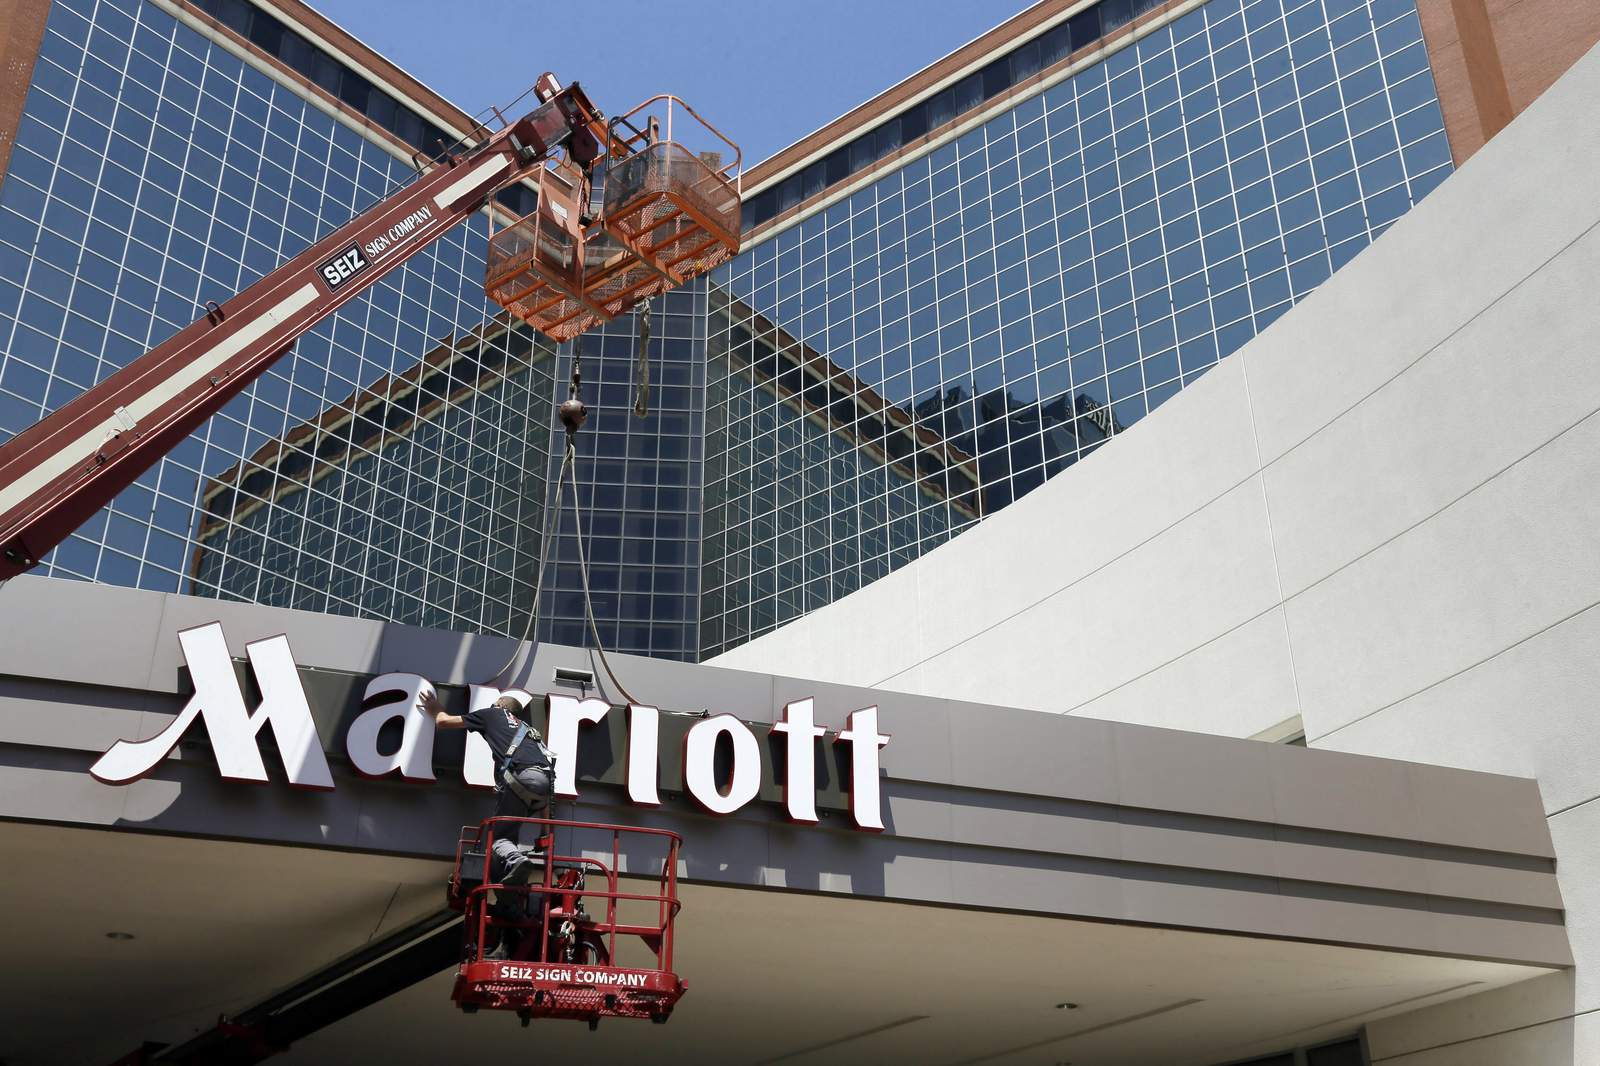 China business travel returns for Marriott, revenue tumbles